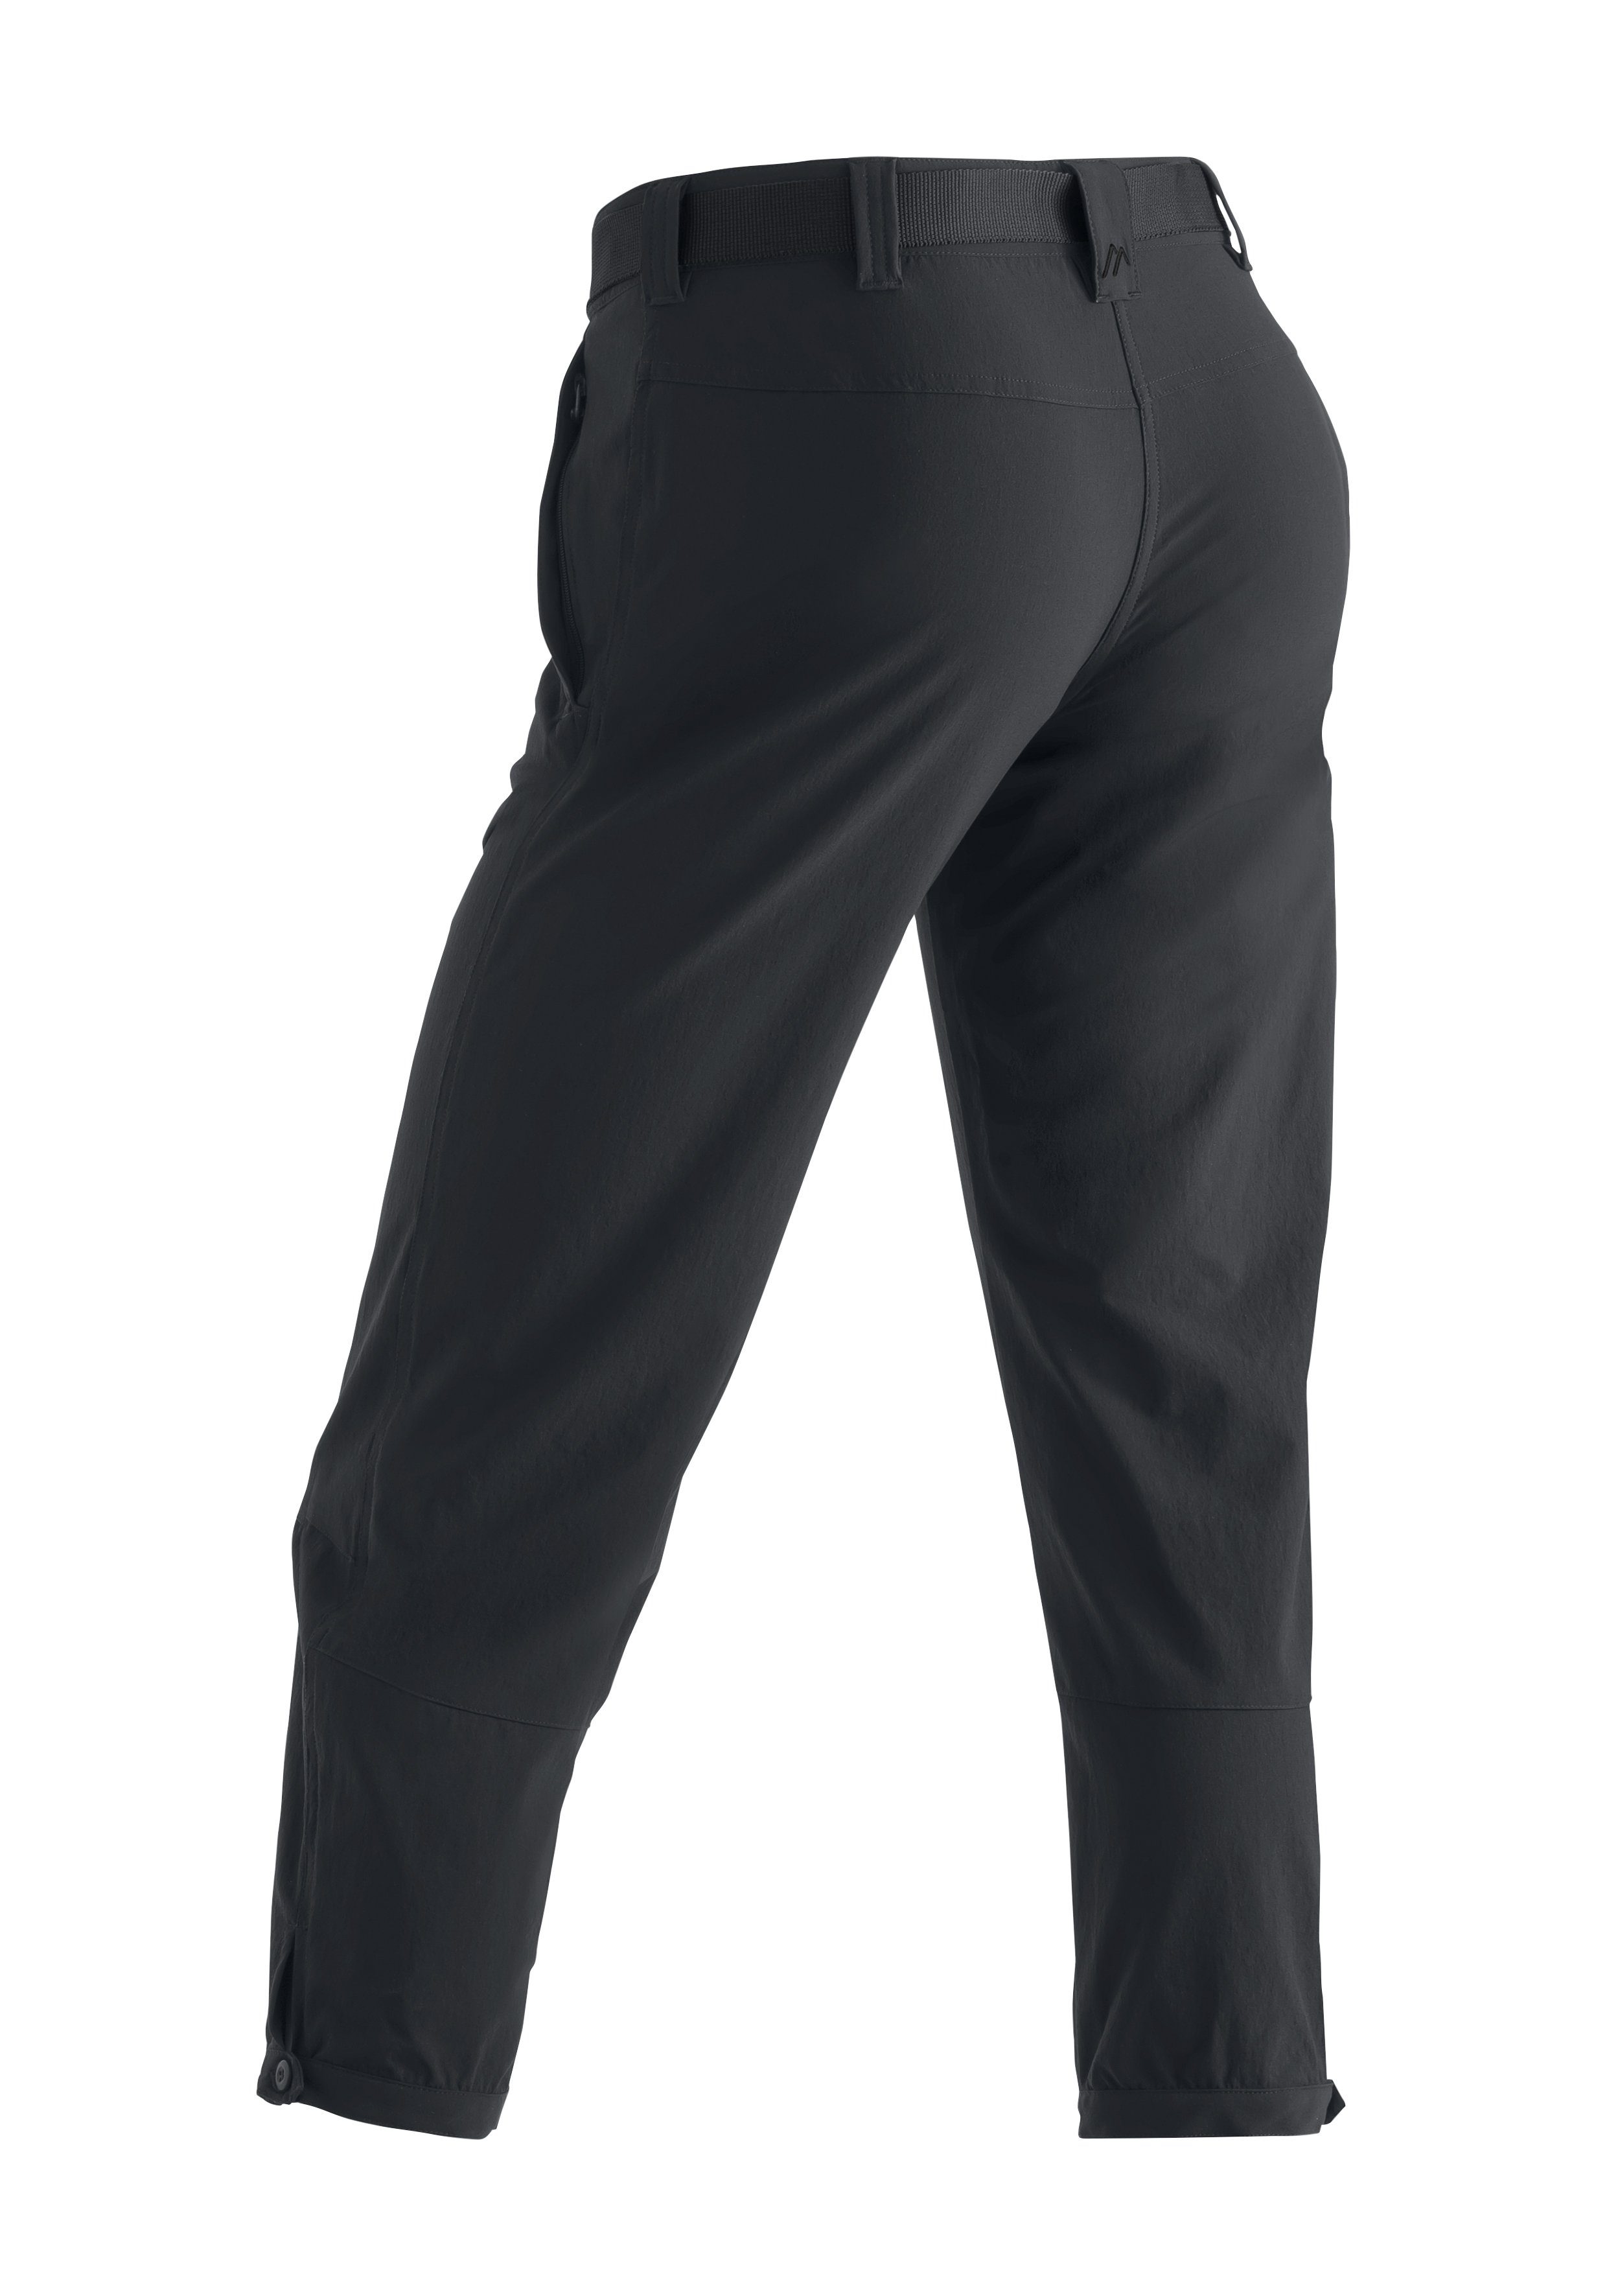 Damen 7/8 Lulaka Outdoor-Hose Wanderhose, elastische Maier Sports schwarz Funktionshose atmungsaktive und